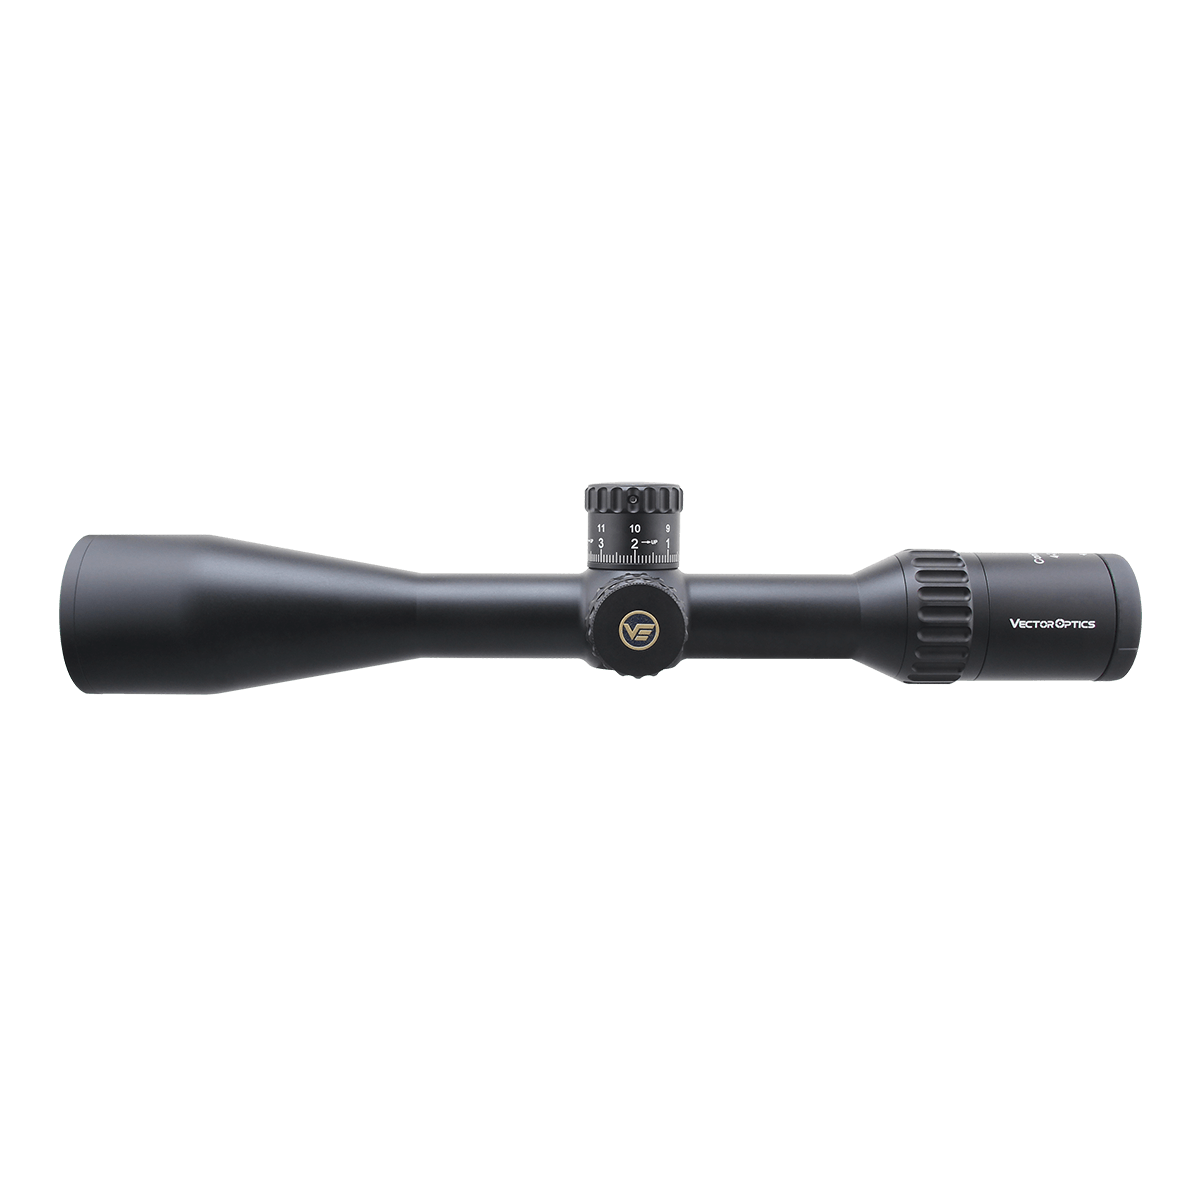 Continental x6 4-24x50 Tactical Riflescope ARI